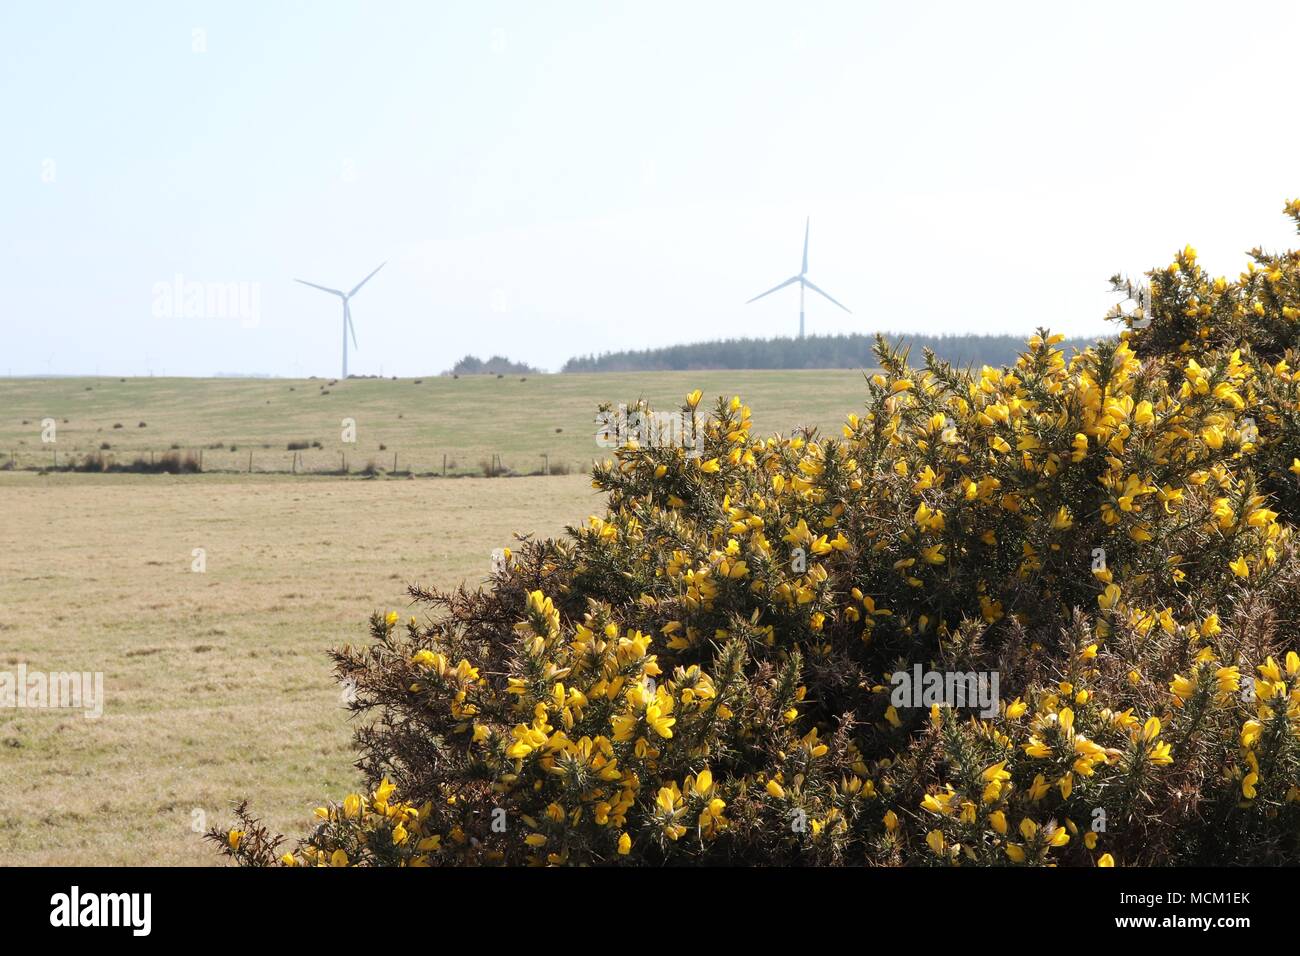 Wind turbines in rural setting Stock Photo